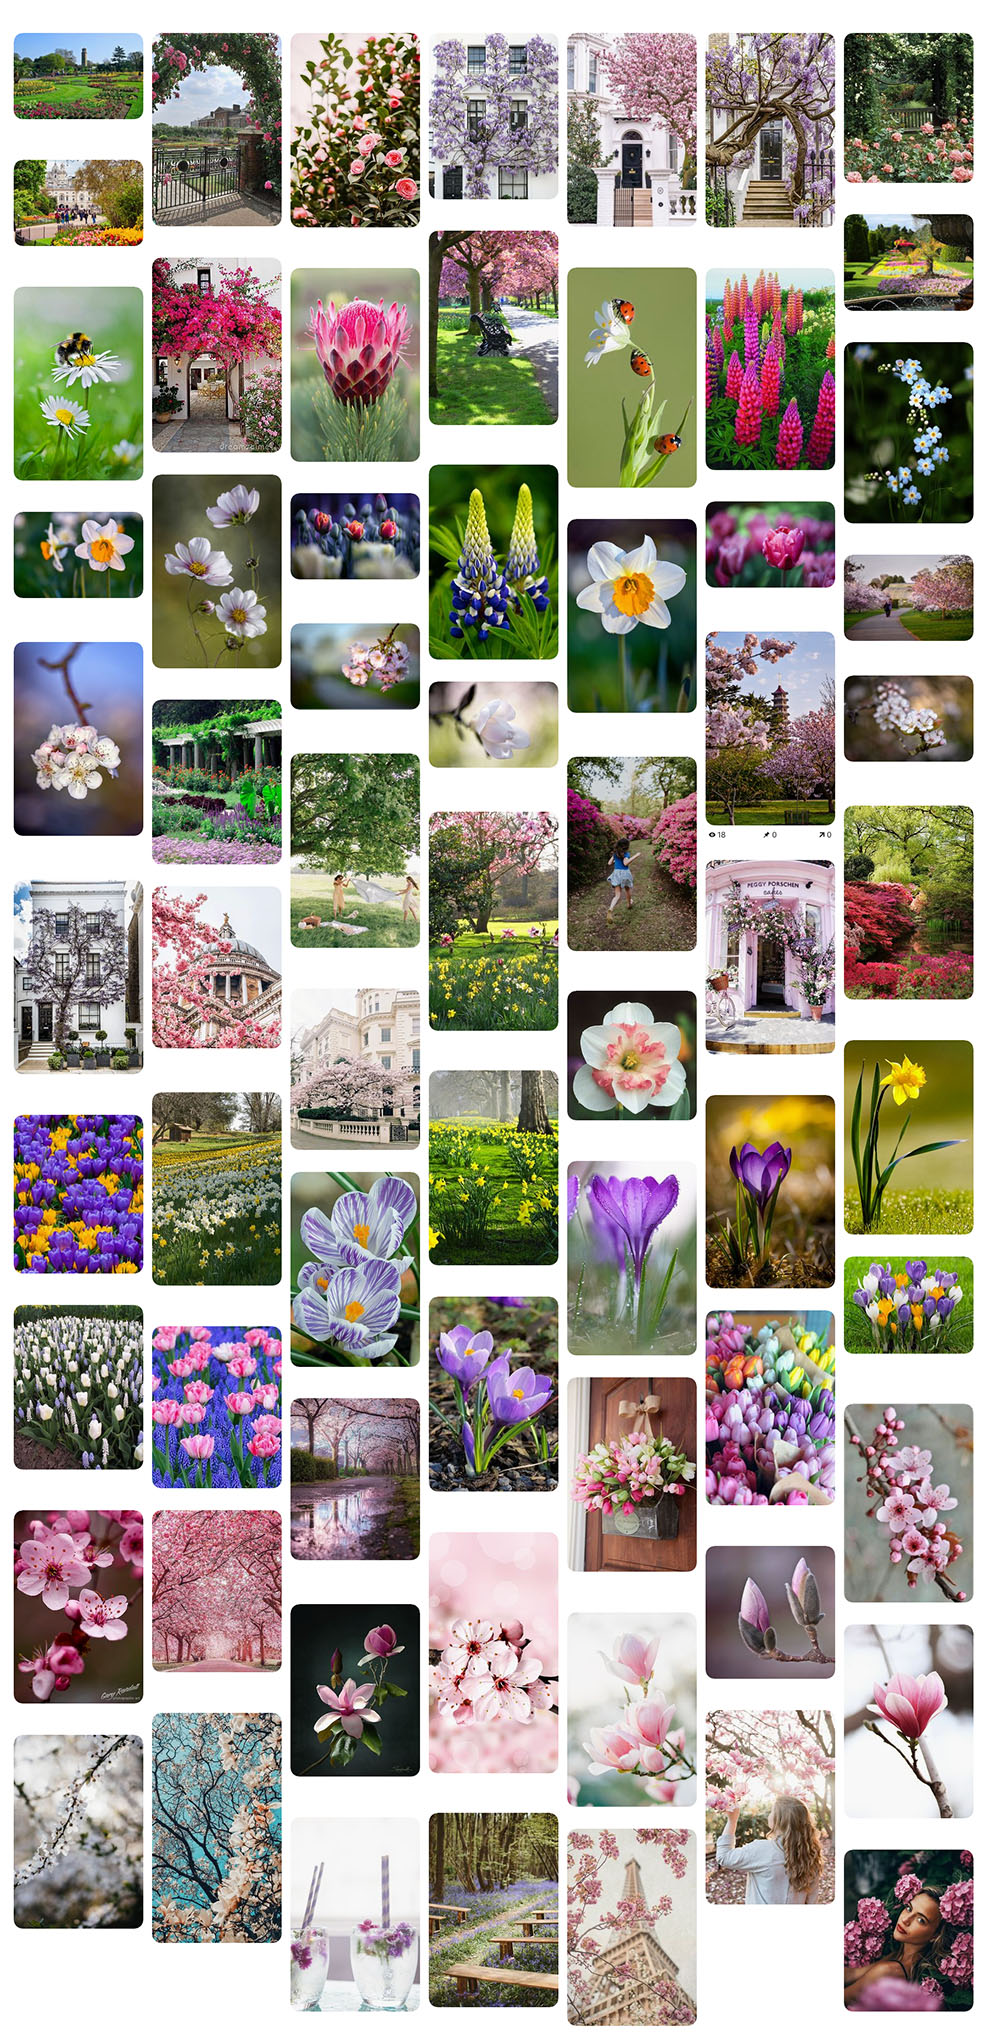 Flower photography on Pinterest